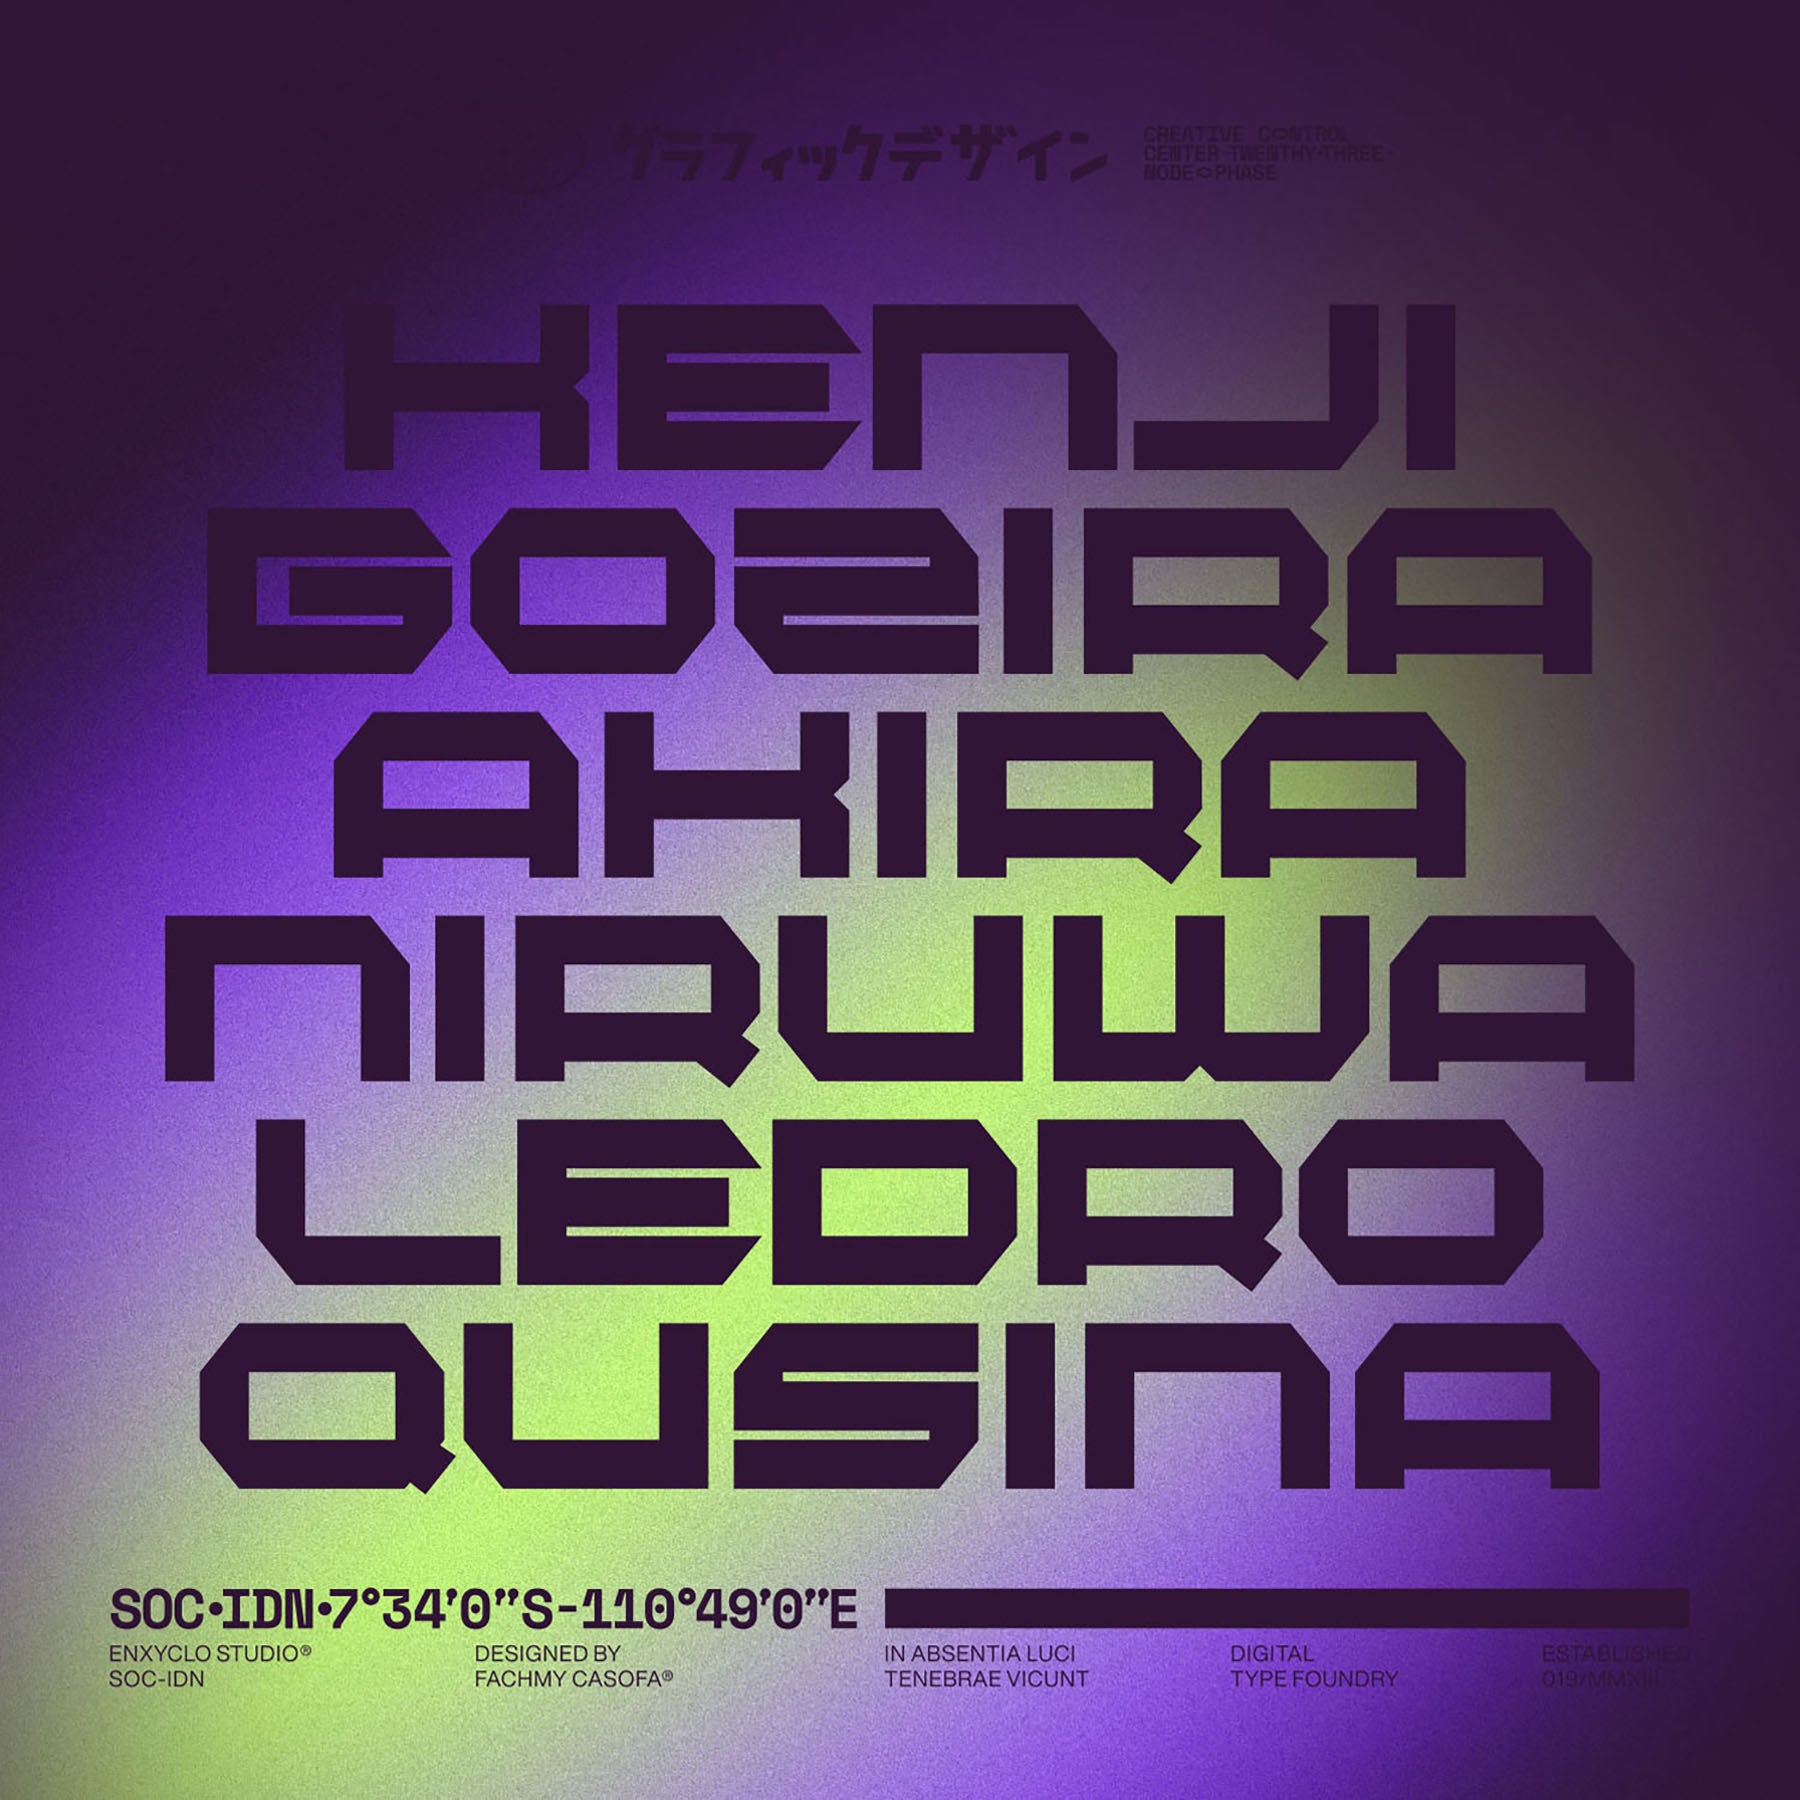 BEXAGO Typeface